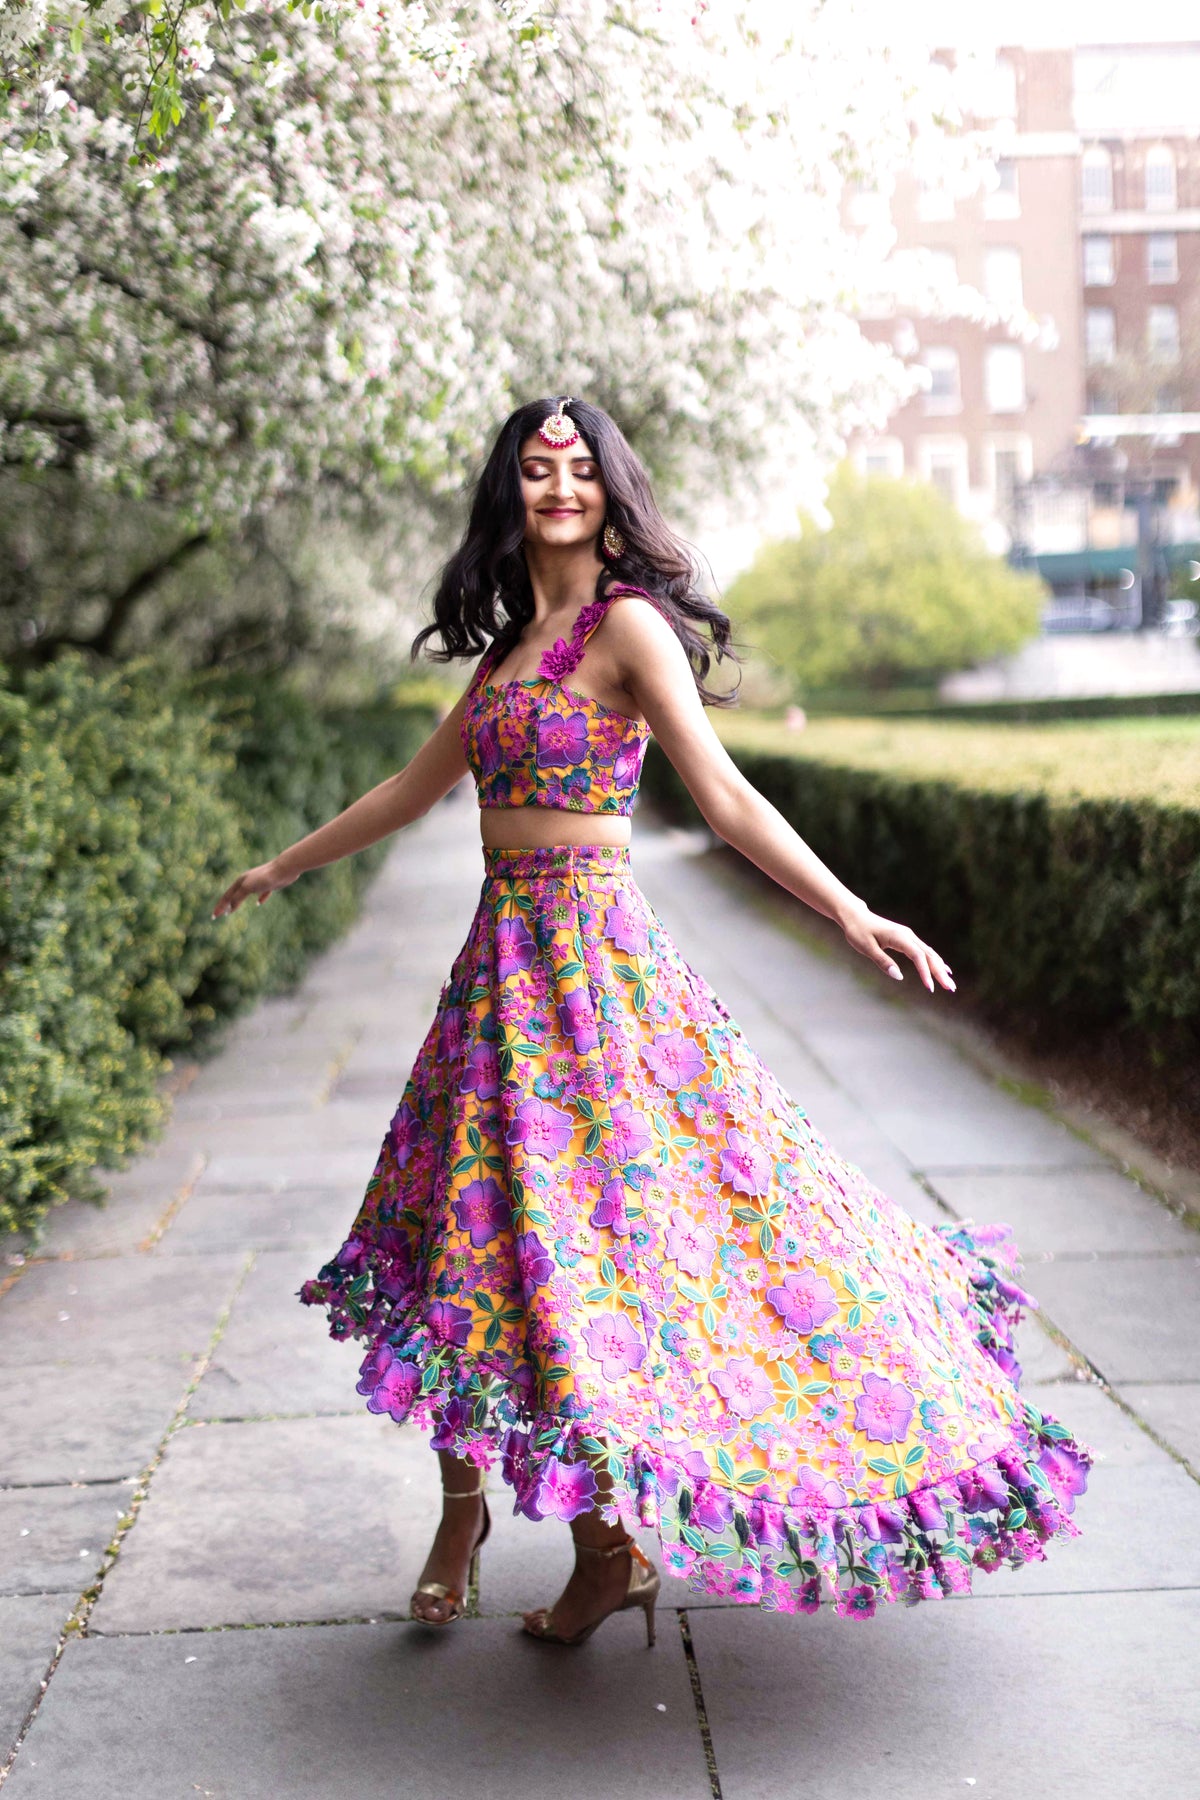 Buy Pakistani western dresses for women – Vanya